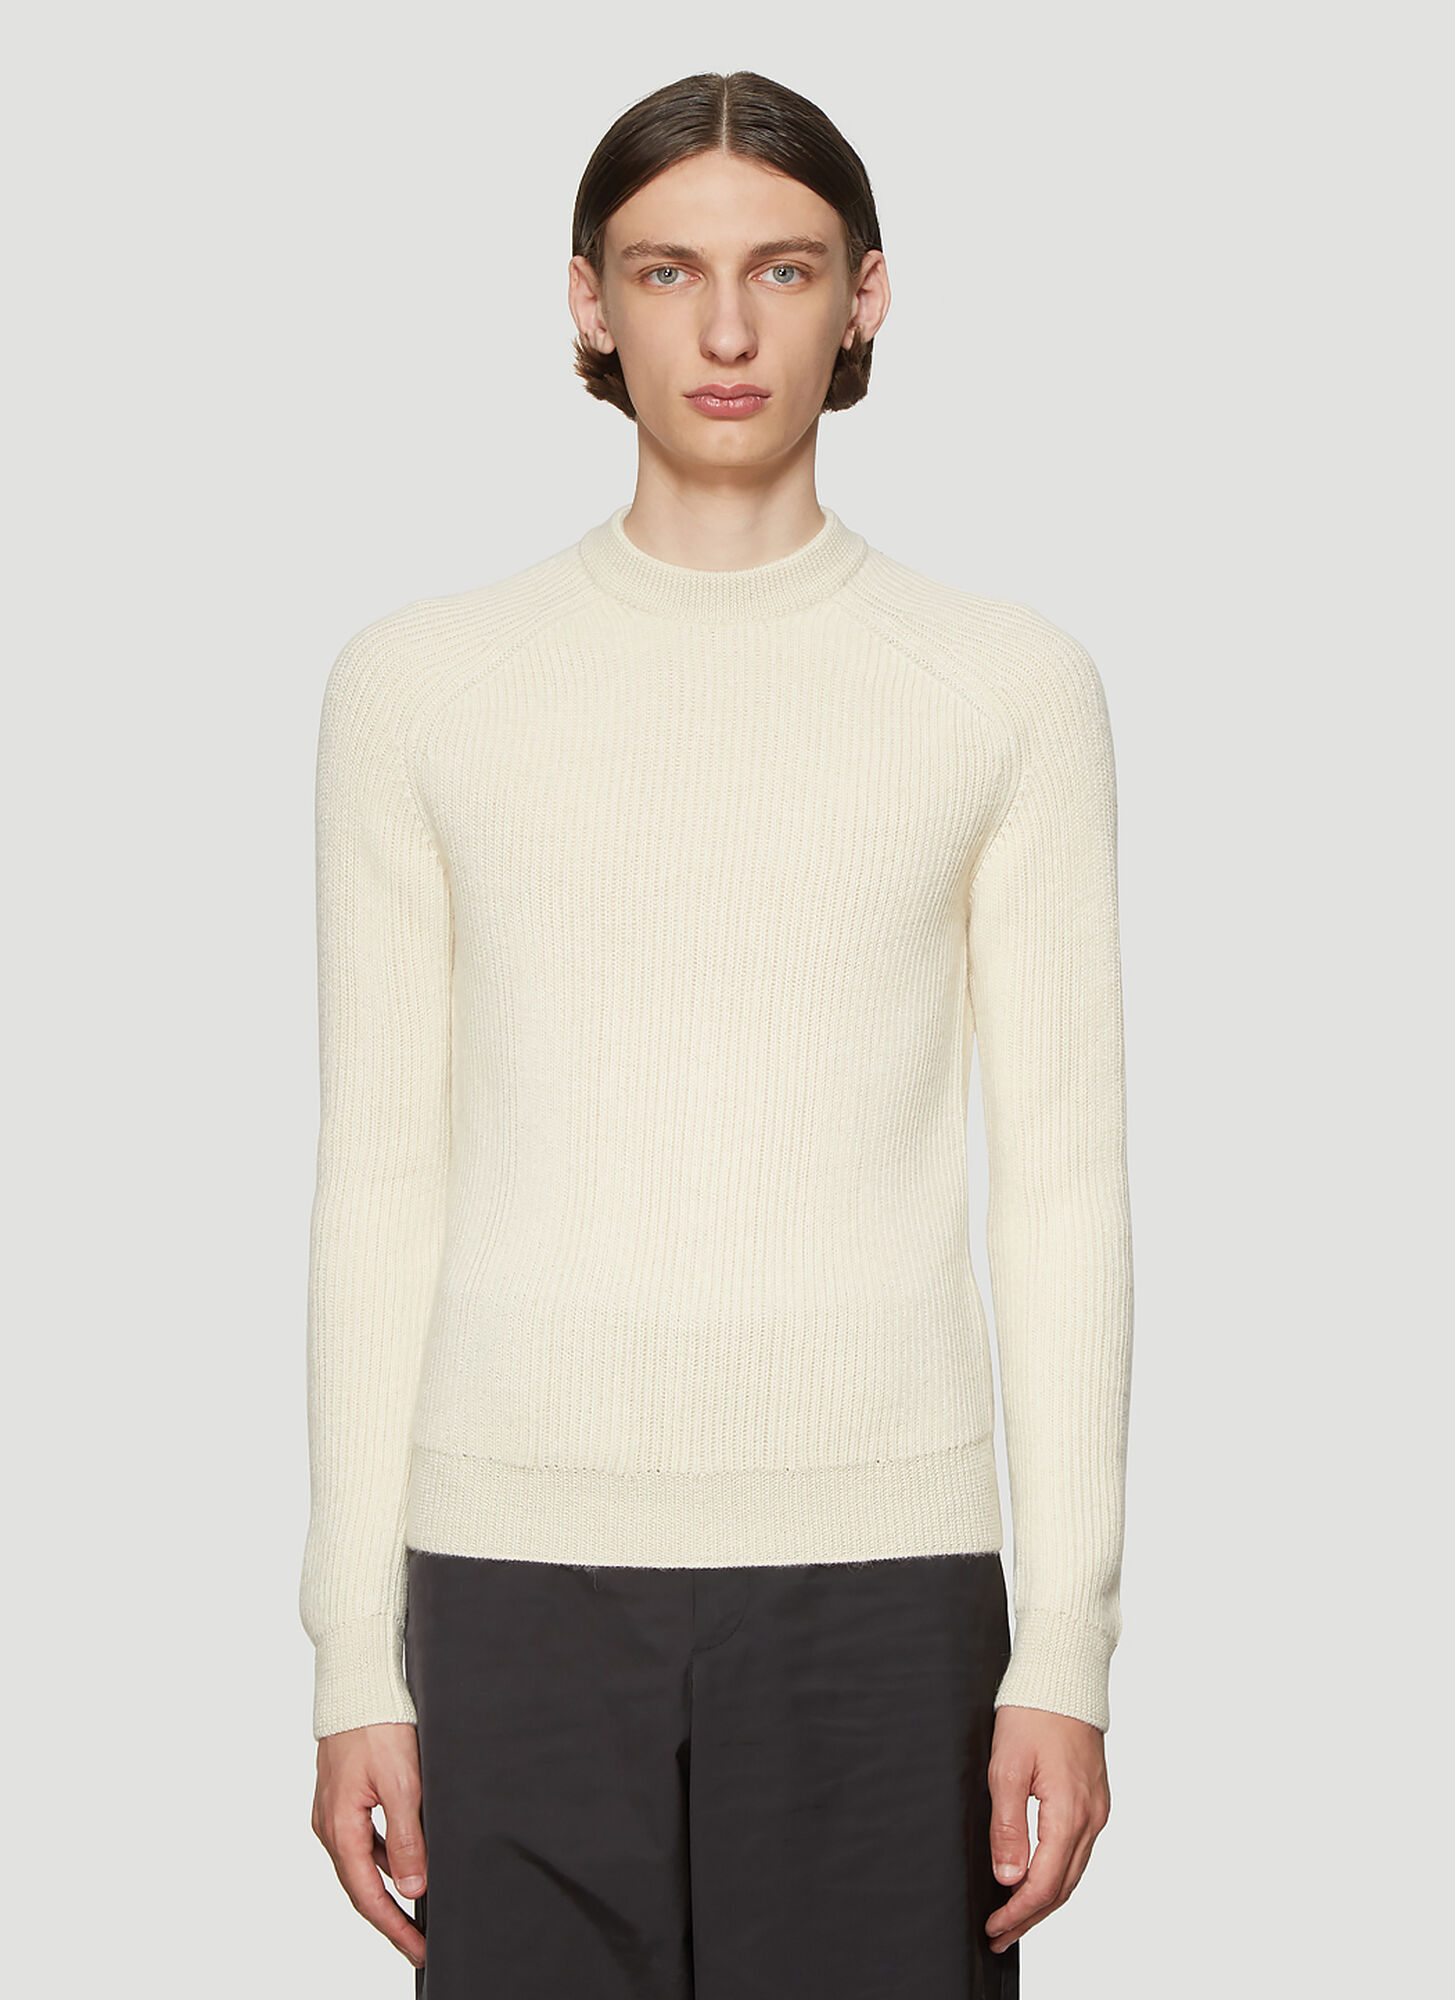 Prada Alpaca Knit Sweater in White size IT – 50 | The Fashionisto